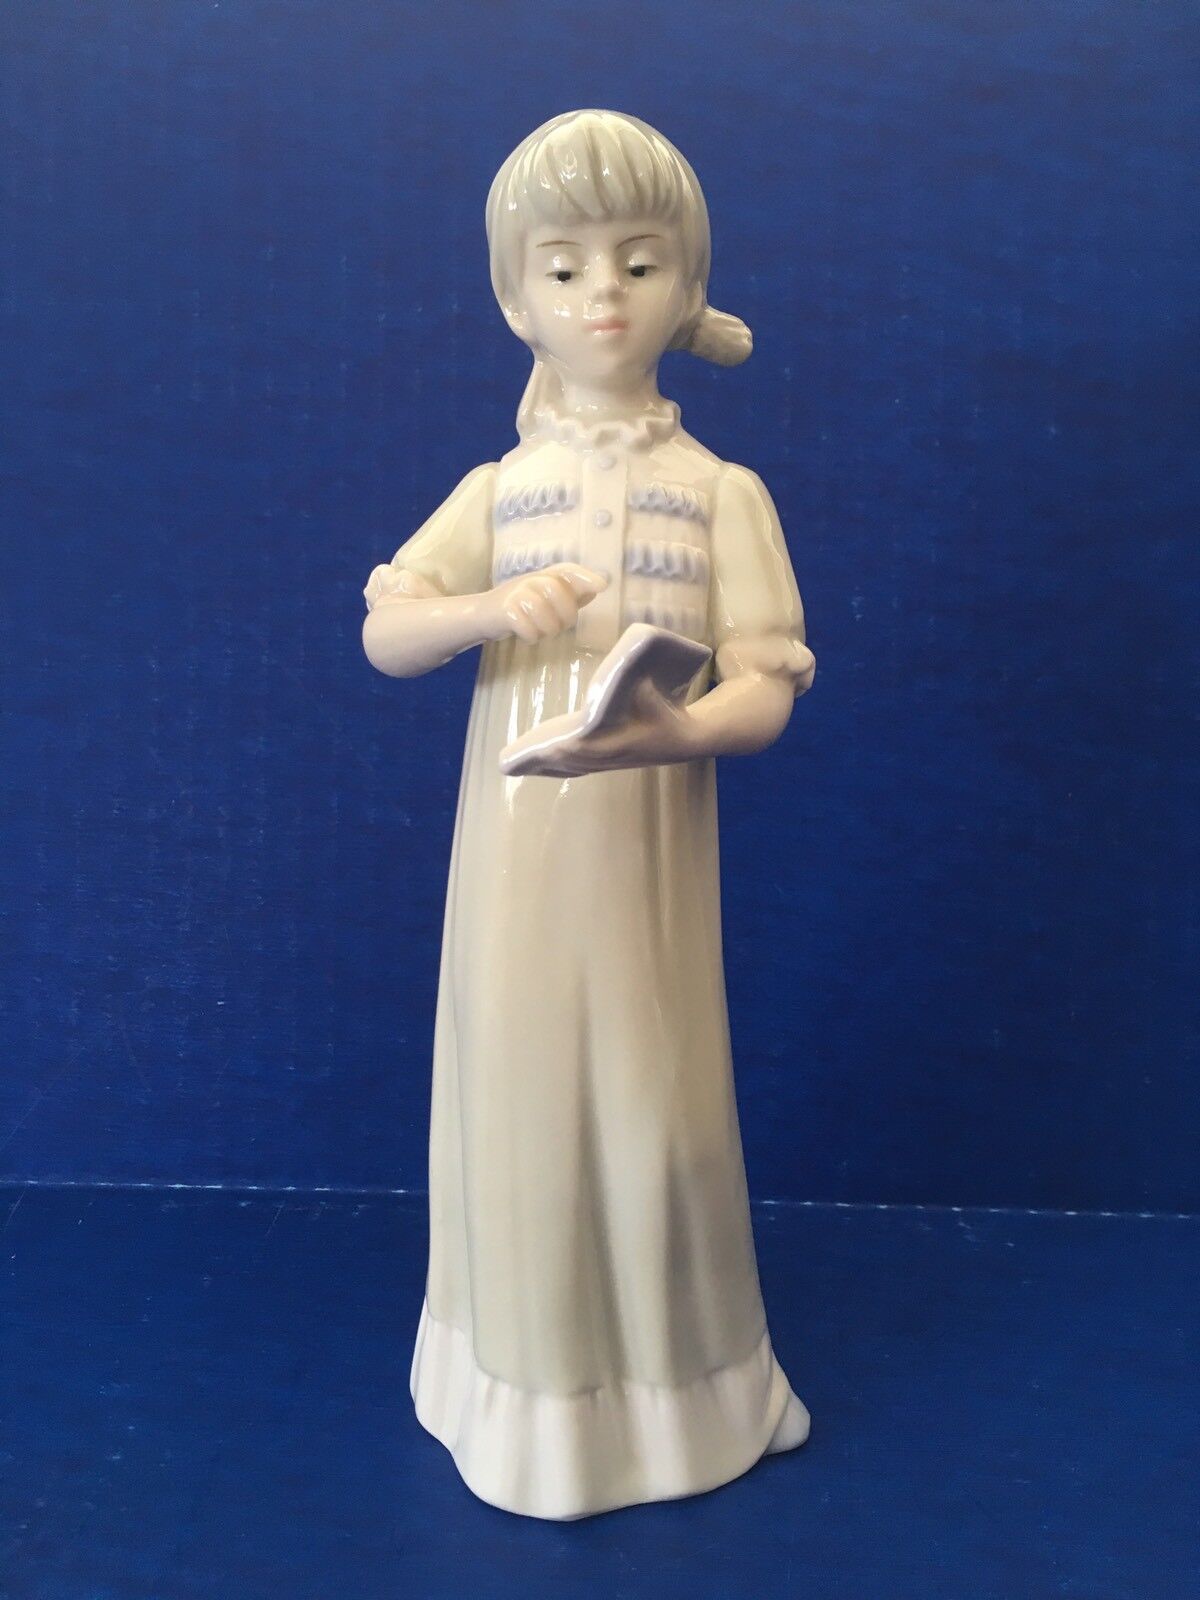 KPM Royal Porzellan Bavaria 1950 Germany porcelain Figurine School Girl Teaching